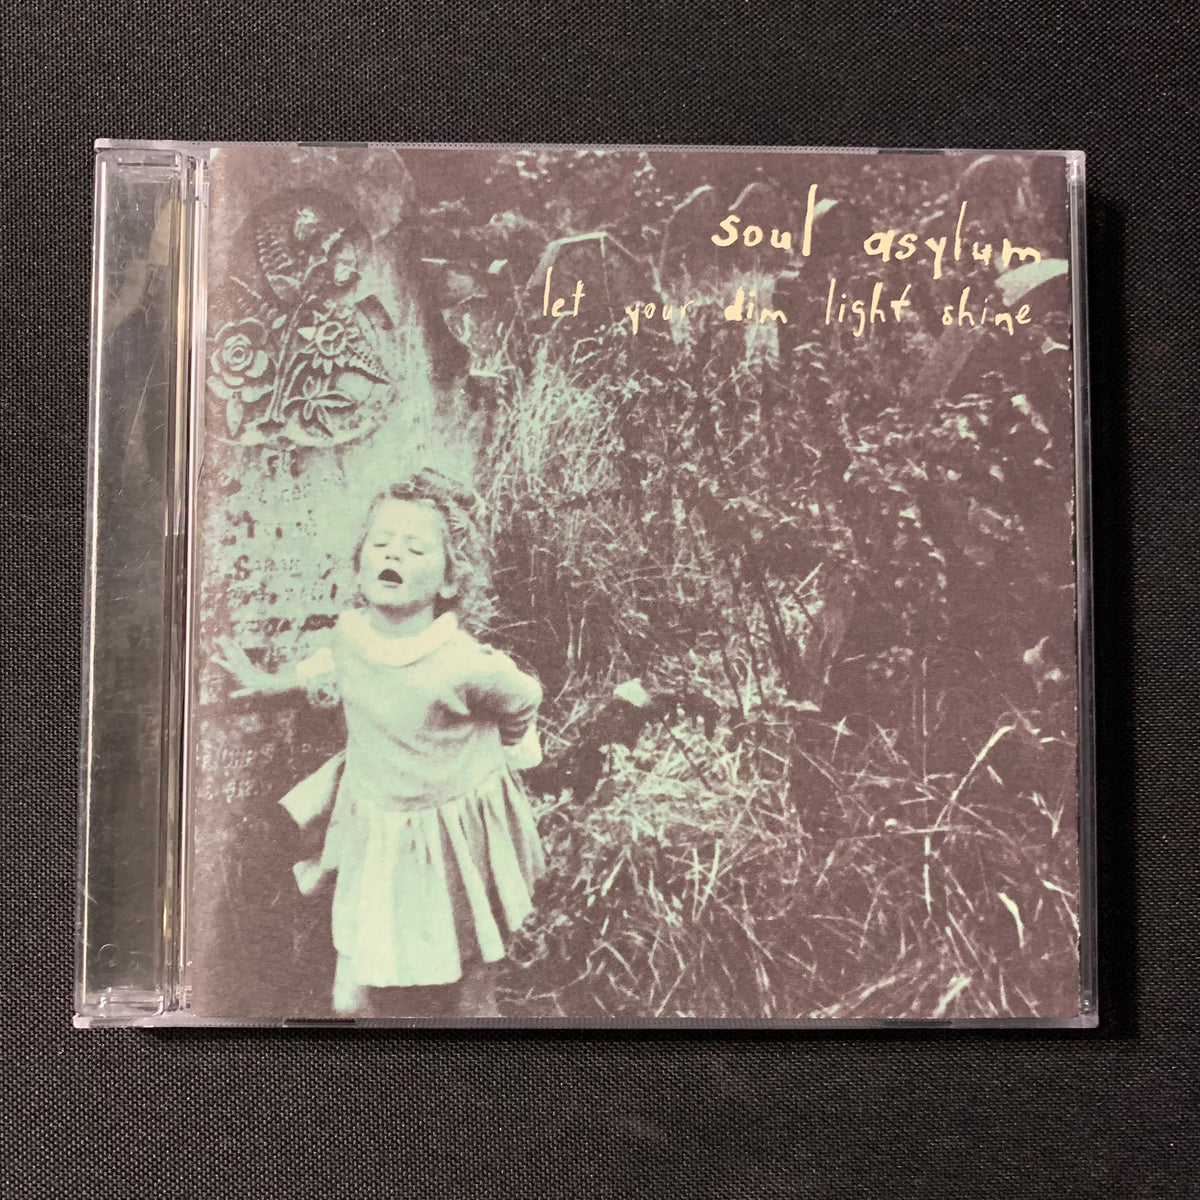 CD Soul Asylum 'Let Your Dim Light Shine' (1995) Misery, Just Like Any